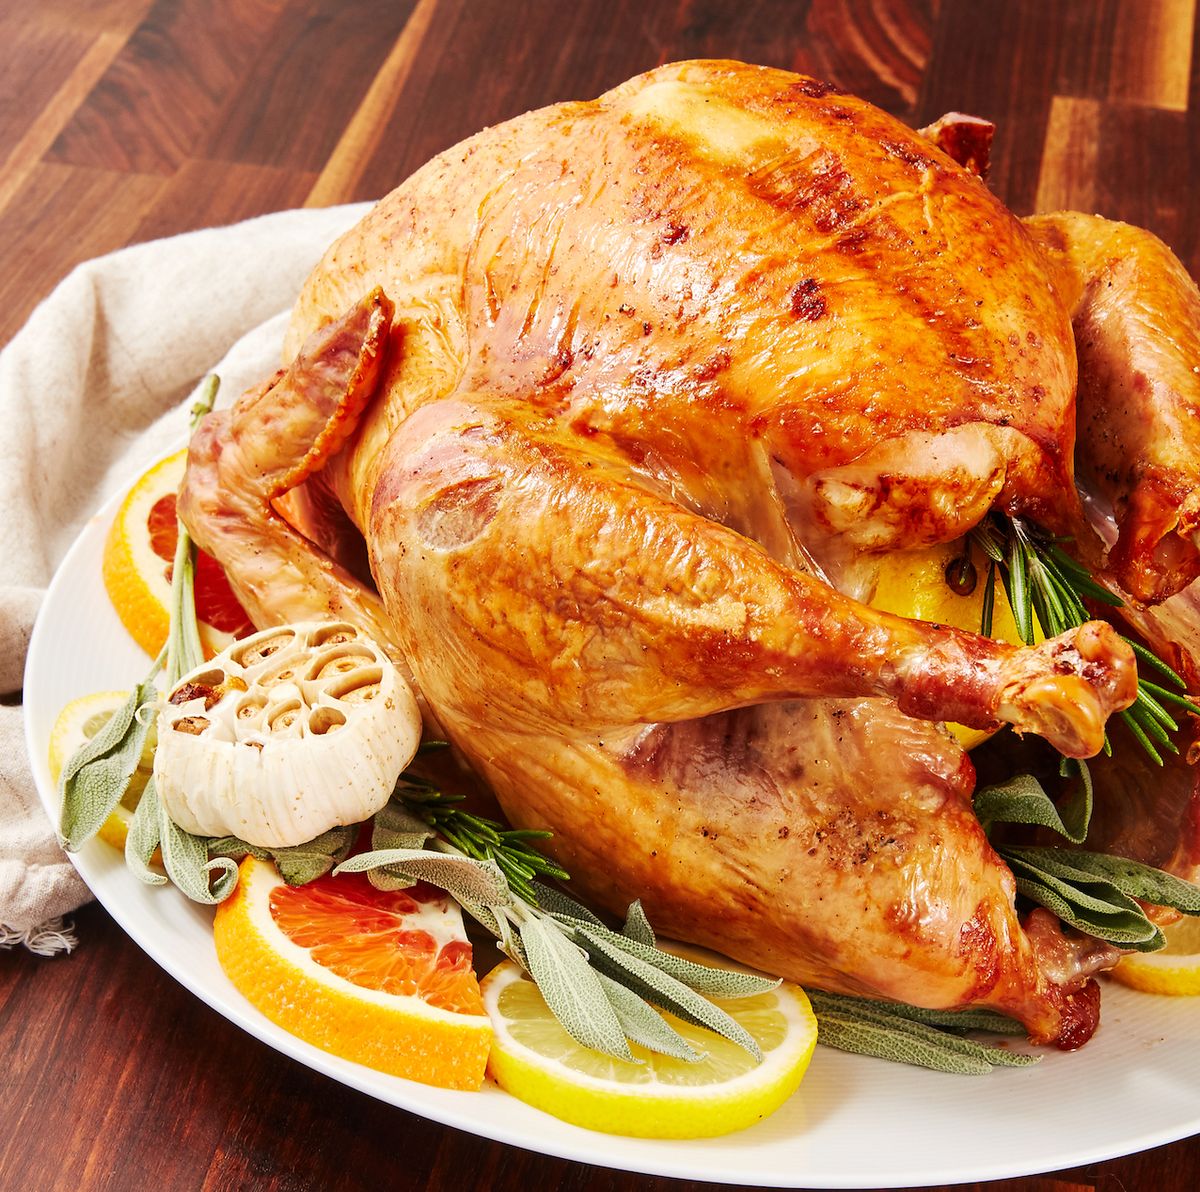 How To Brine A Turkey (With An Easy Brine Recipe)